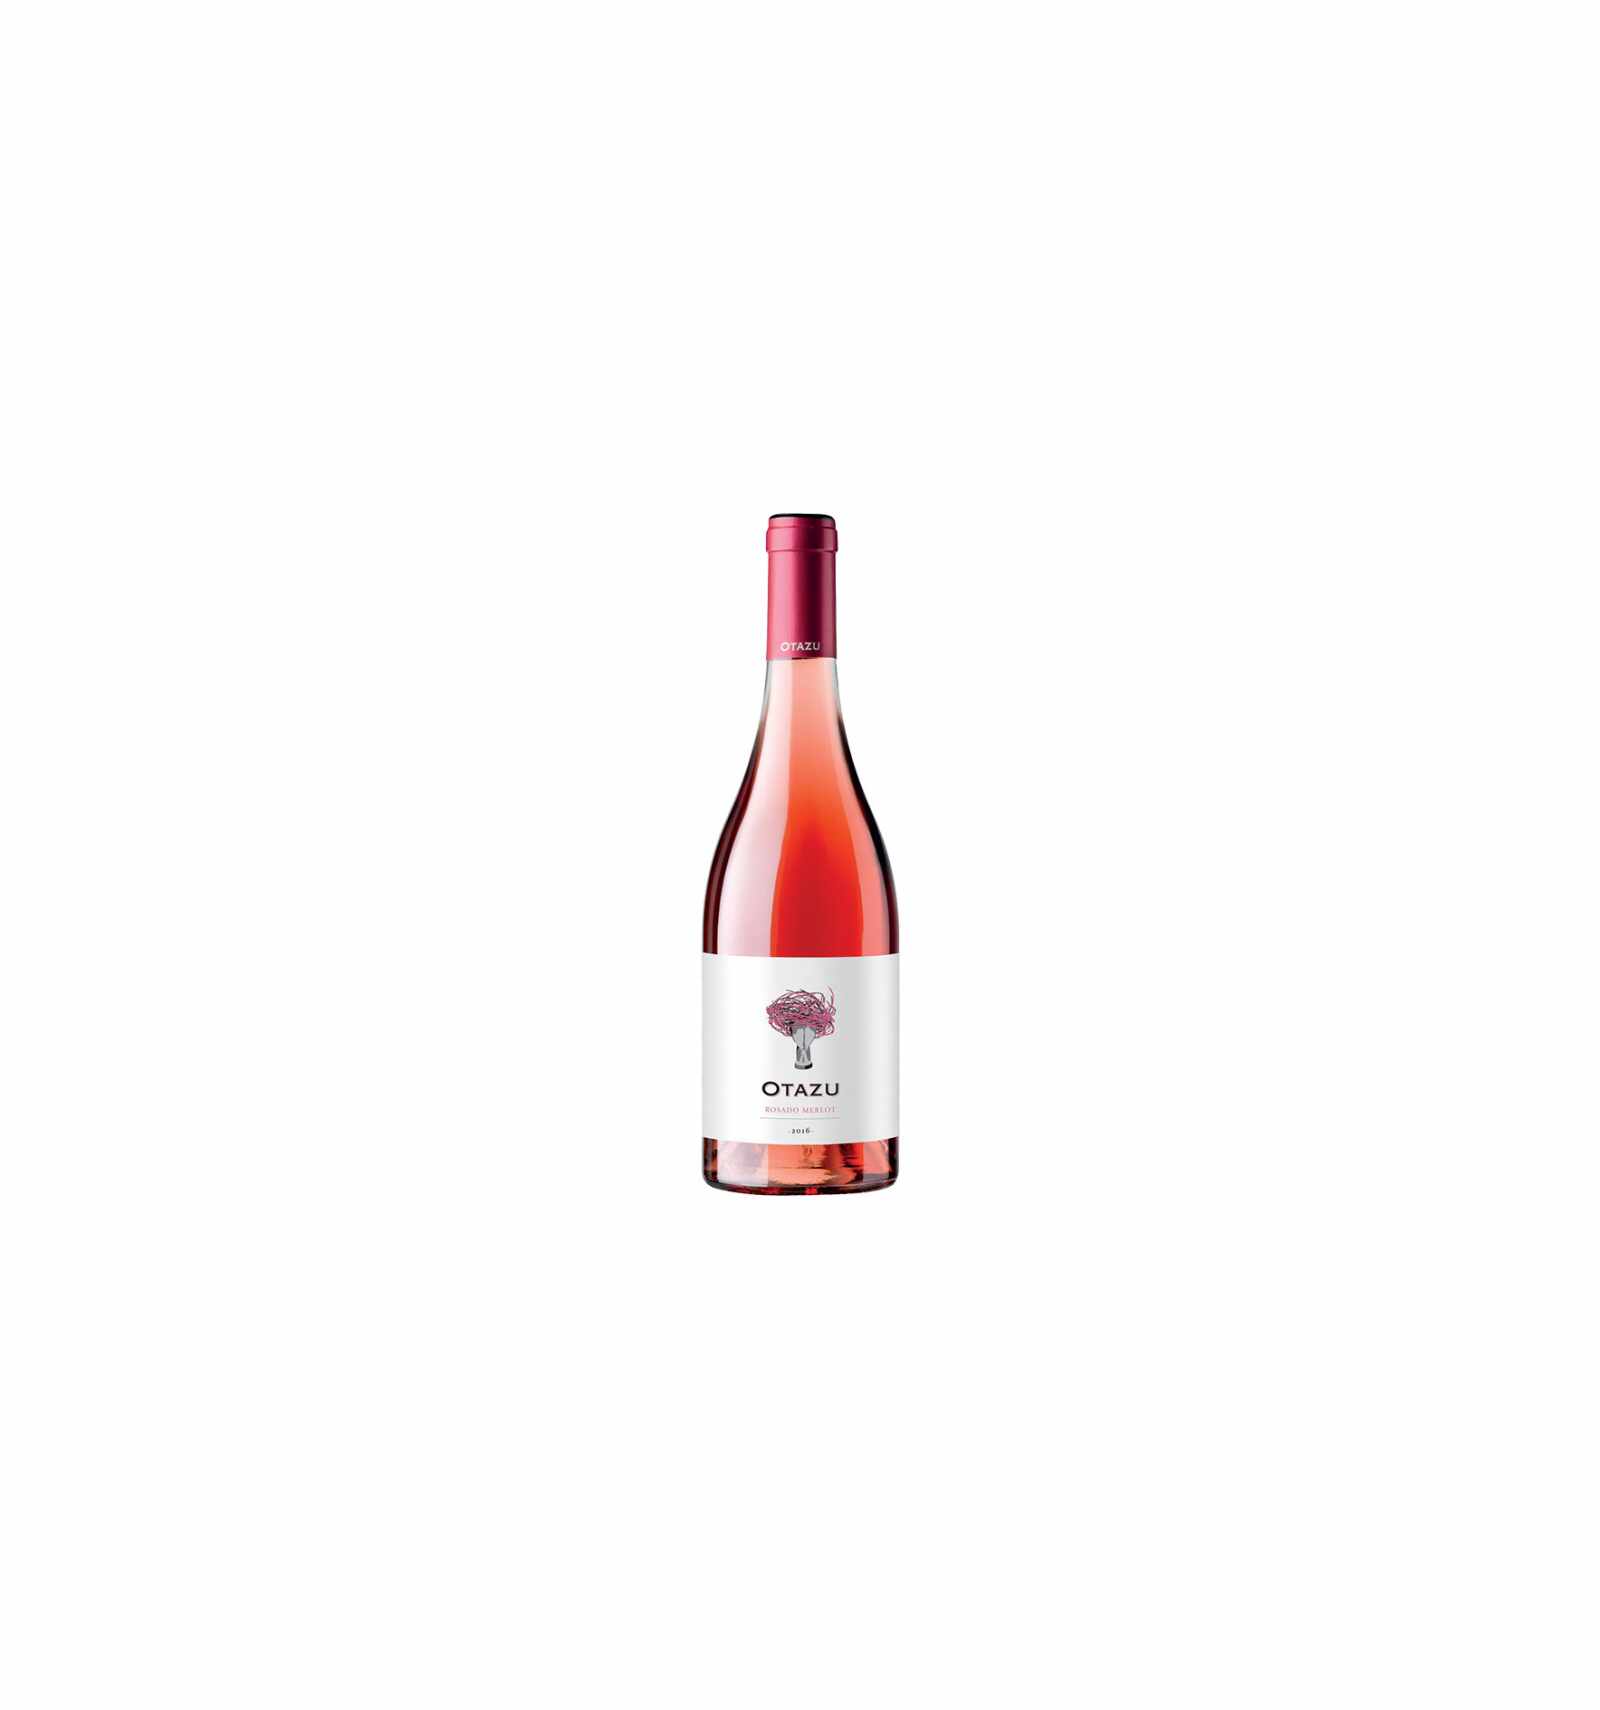 Vin roze, Rosado Merlot, Otazu, 13.5% alc., 0.75L, Spania